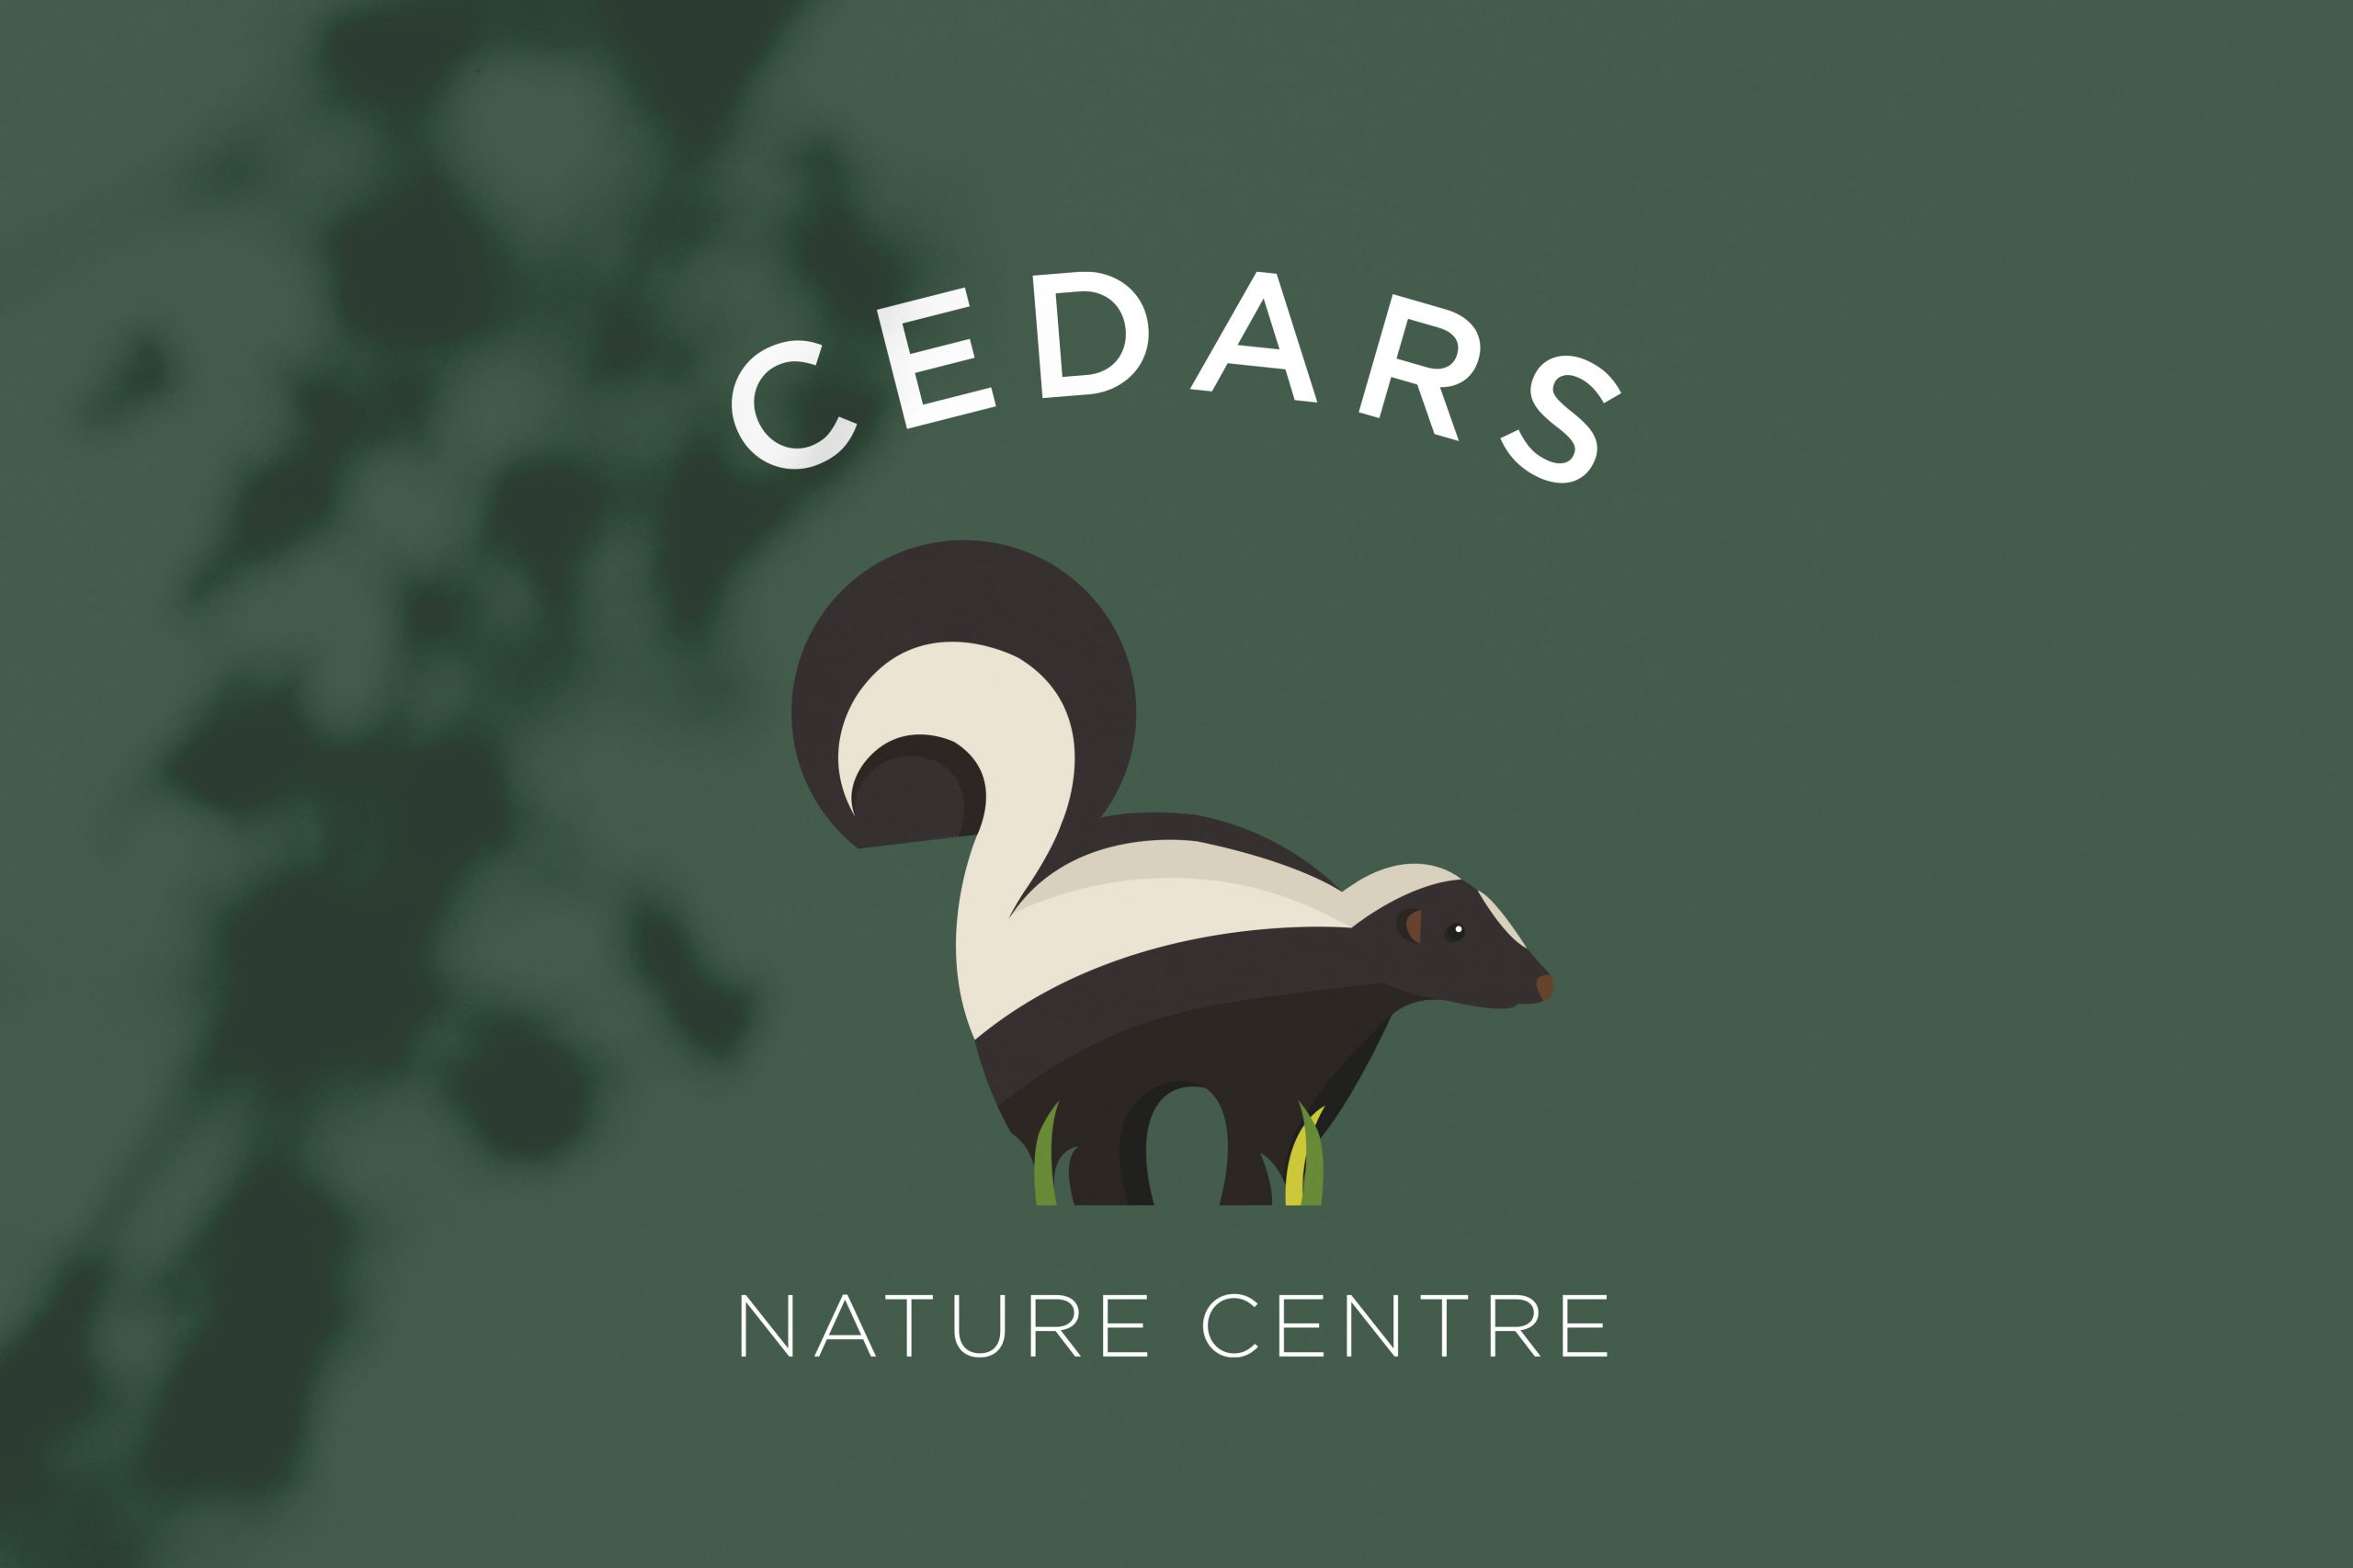 Cedars Nature Centre Brand Identity Design